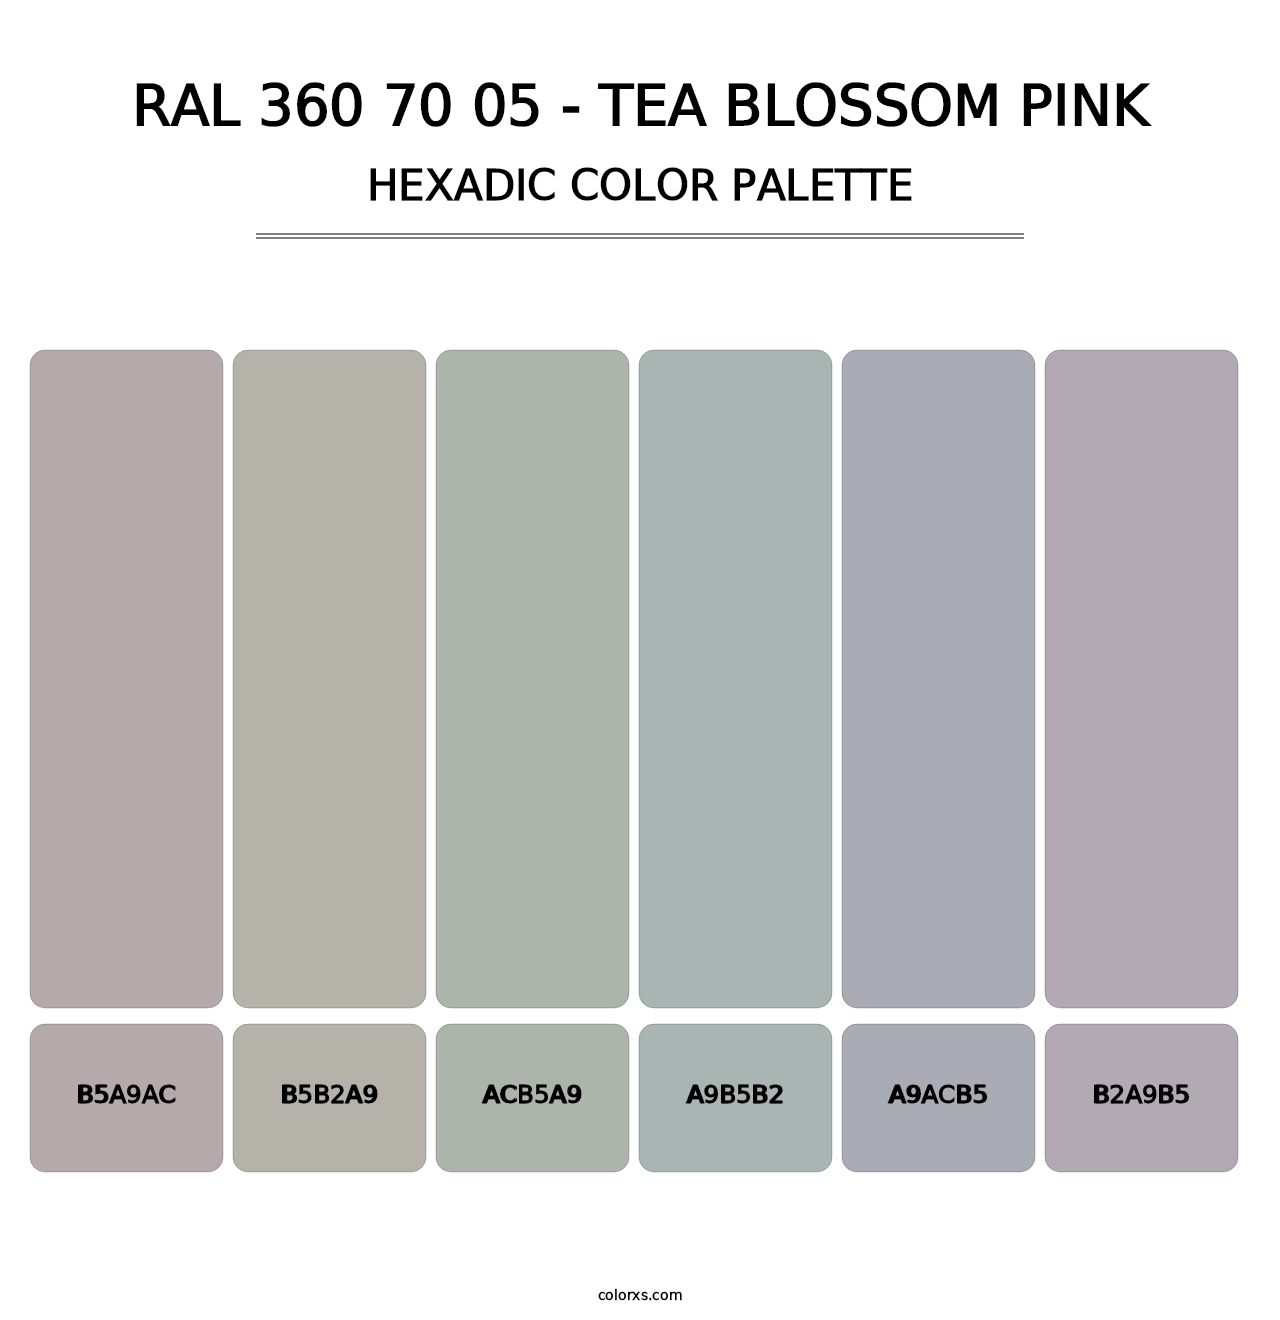 RAL 360 70 05 - Tea Blossom Pink - Hexadic Color Palette